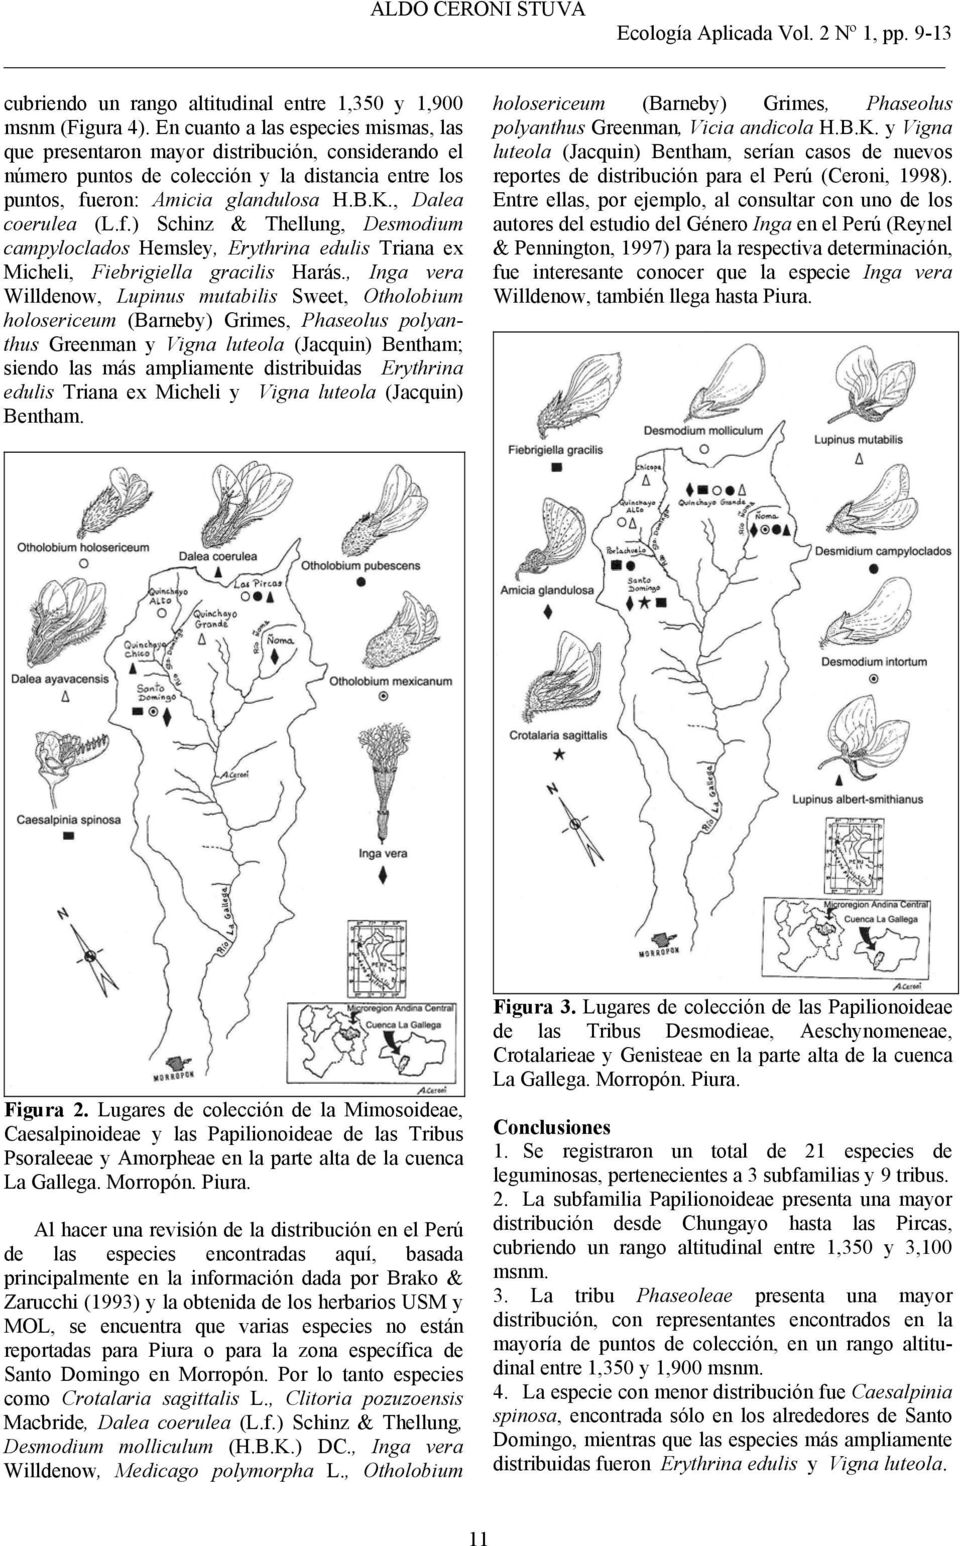 , Dalea coerulea (L.f.) Schinz & Thellung, Desmodium campyloclados Hemsley, Erythrina edulis Triana ex Micheli, Fiebrigiella gracilis Harás.